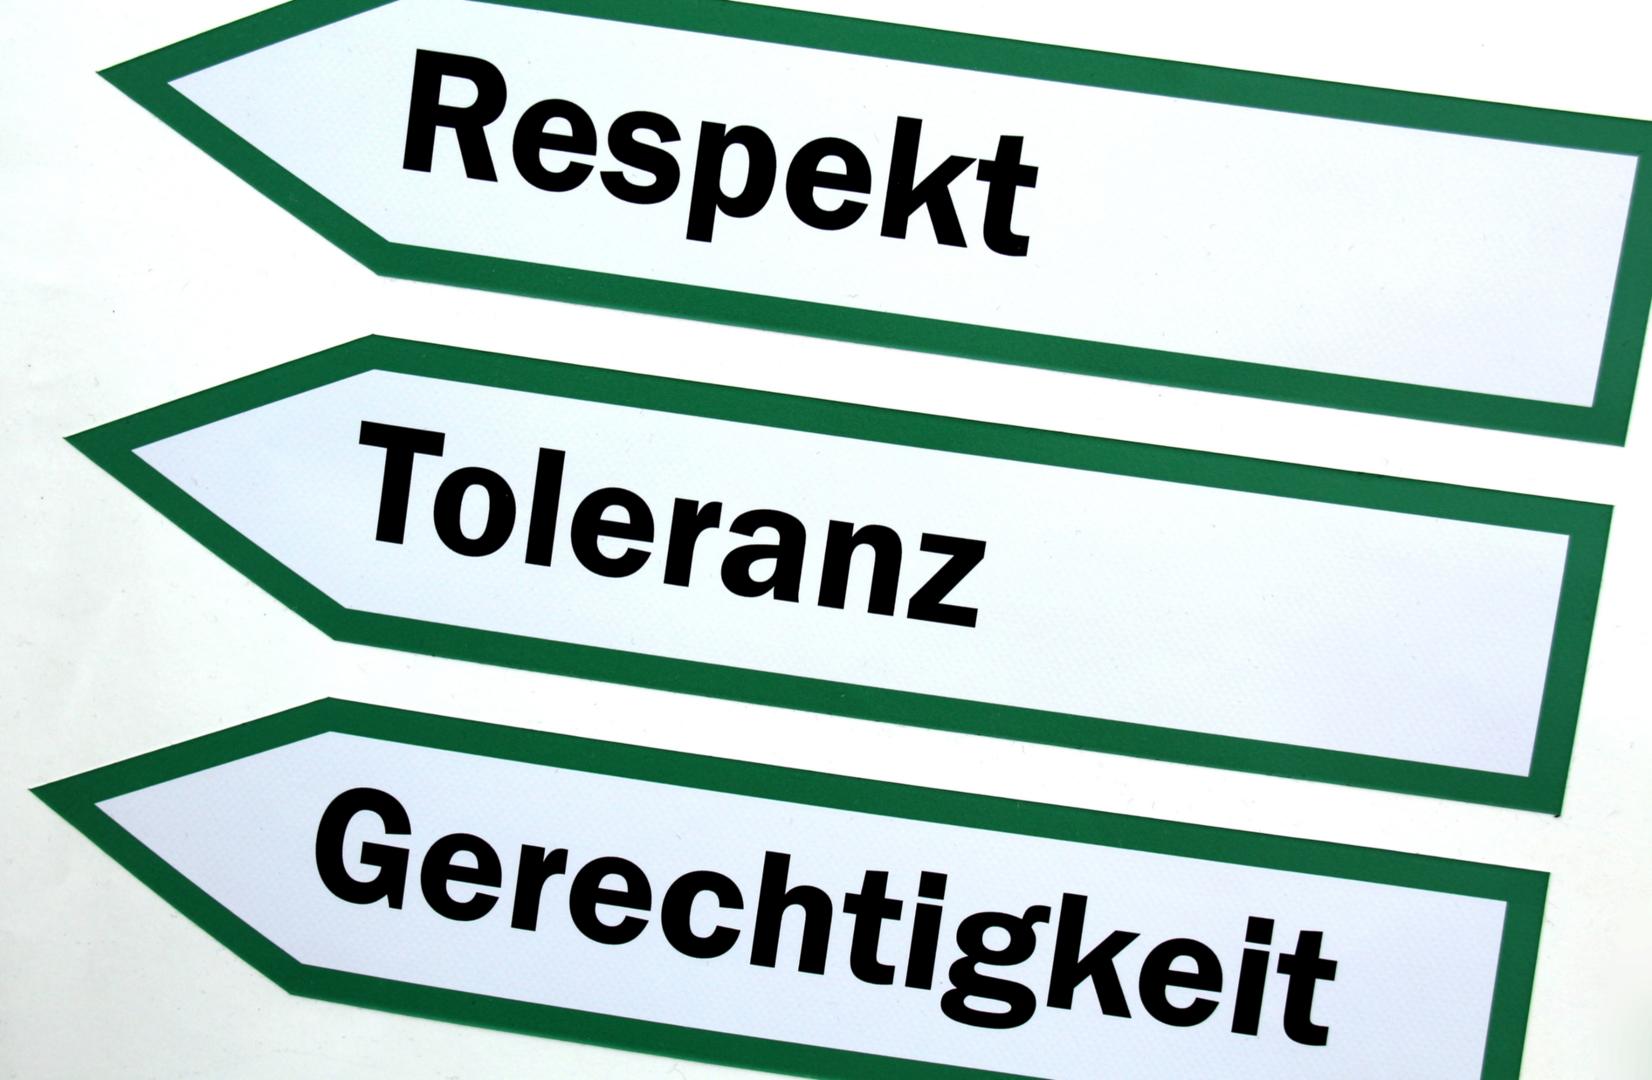 respekt_toleranz_gerechtigkeit_by_peter_weidemann_pfarrbriefservice (c) Peter Weidemann In: Pfarrbriefservice.de